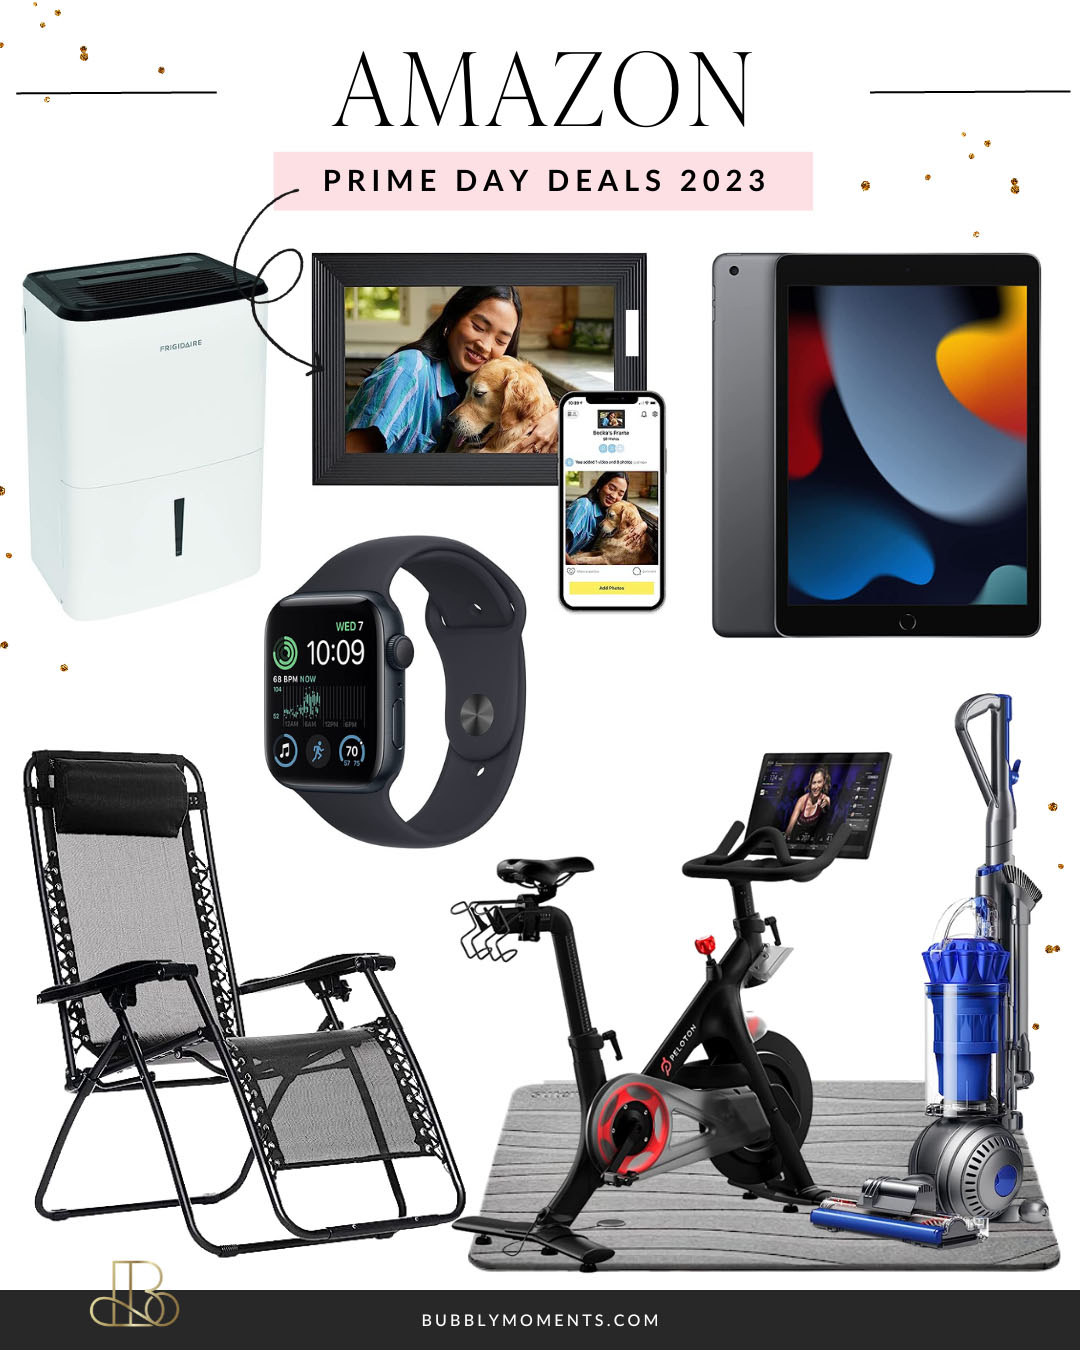 Amazon Prime Day Deals 2023 | Prime Day Deals 2023 | Amazon Prime 2023 | Amazon Deal Days 2023